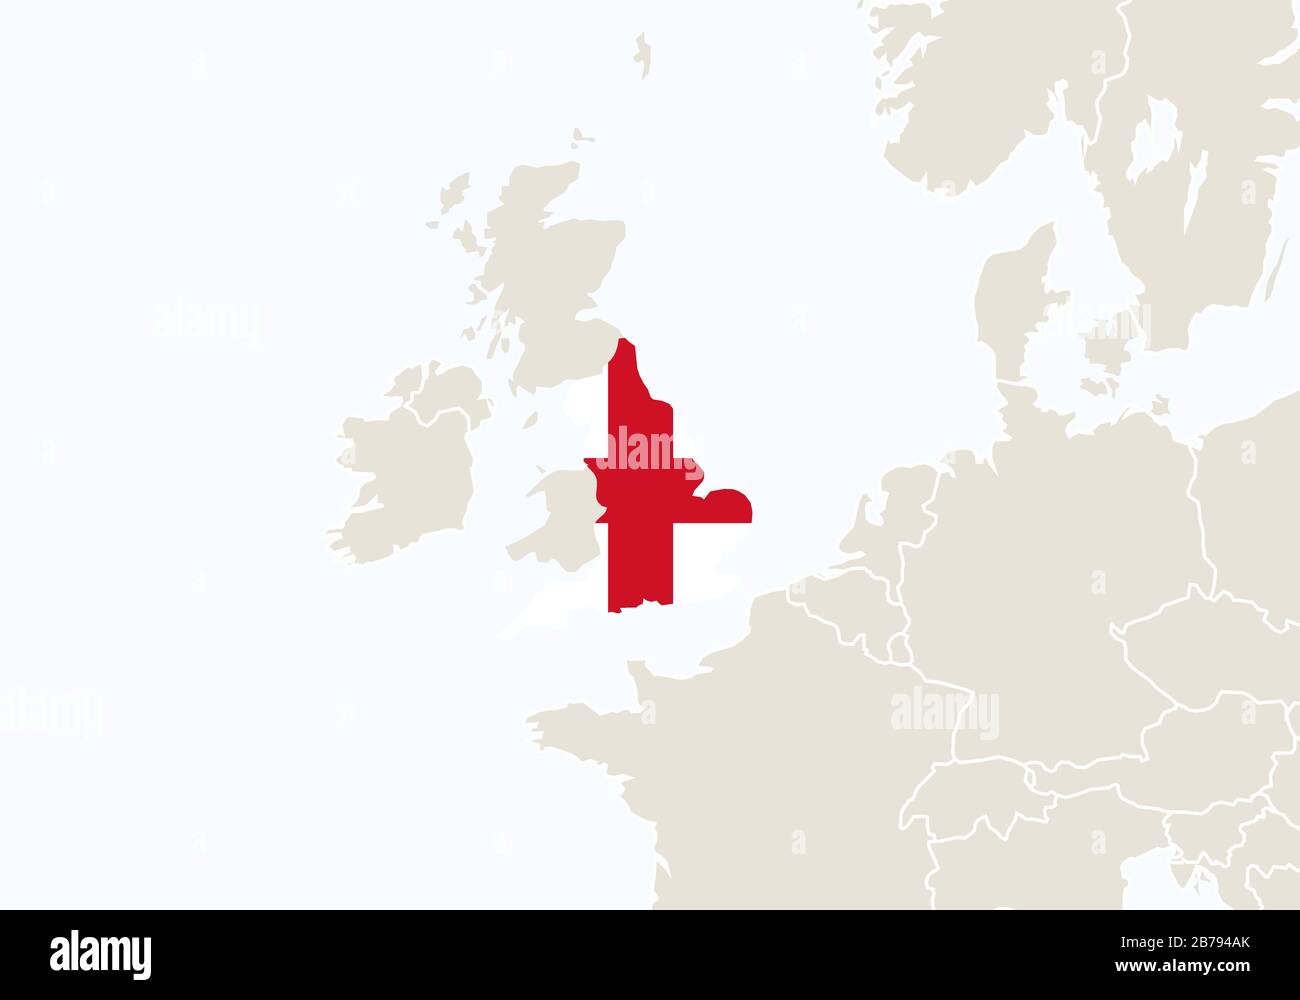 Europa mit hervorgehobener England-Karte. Vektorgrafiken. Stock Vektor